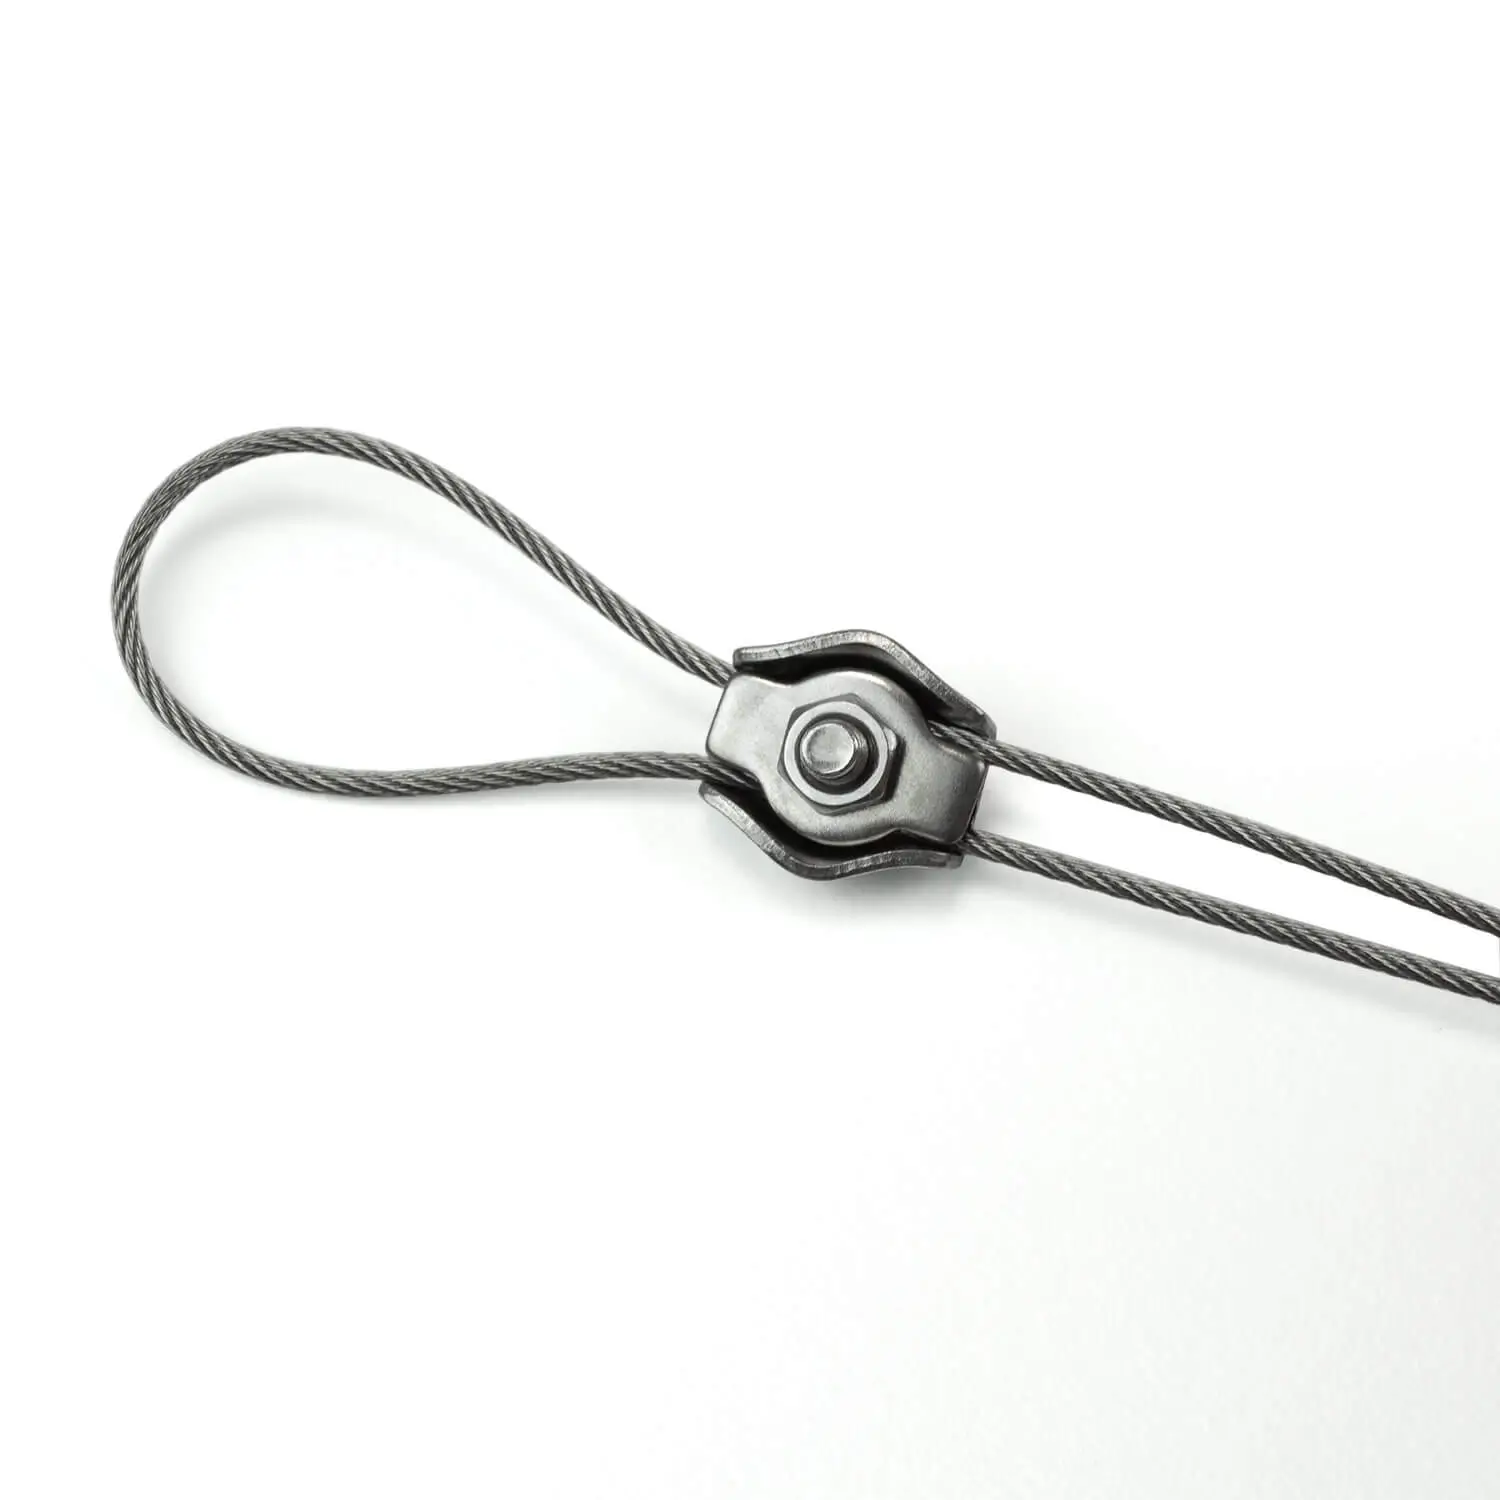 Simplex Drahtseilklemme aus Edelstahl für 1,5 - 2 mm Seil